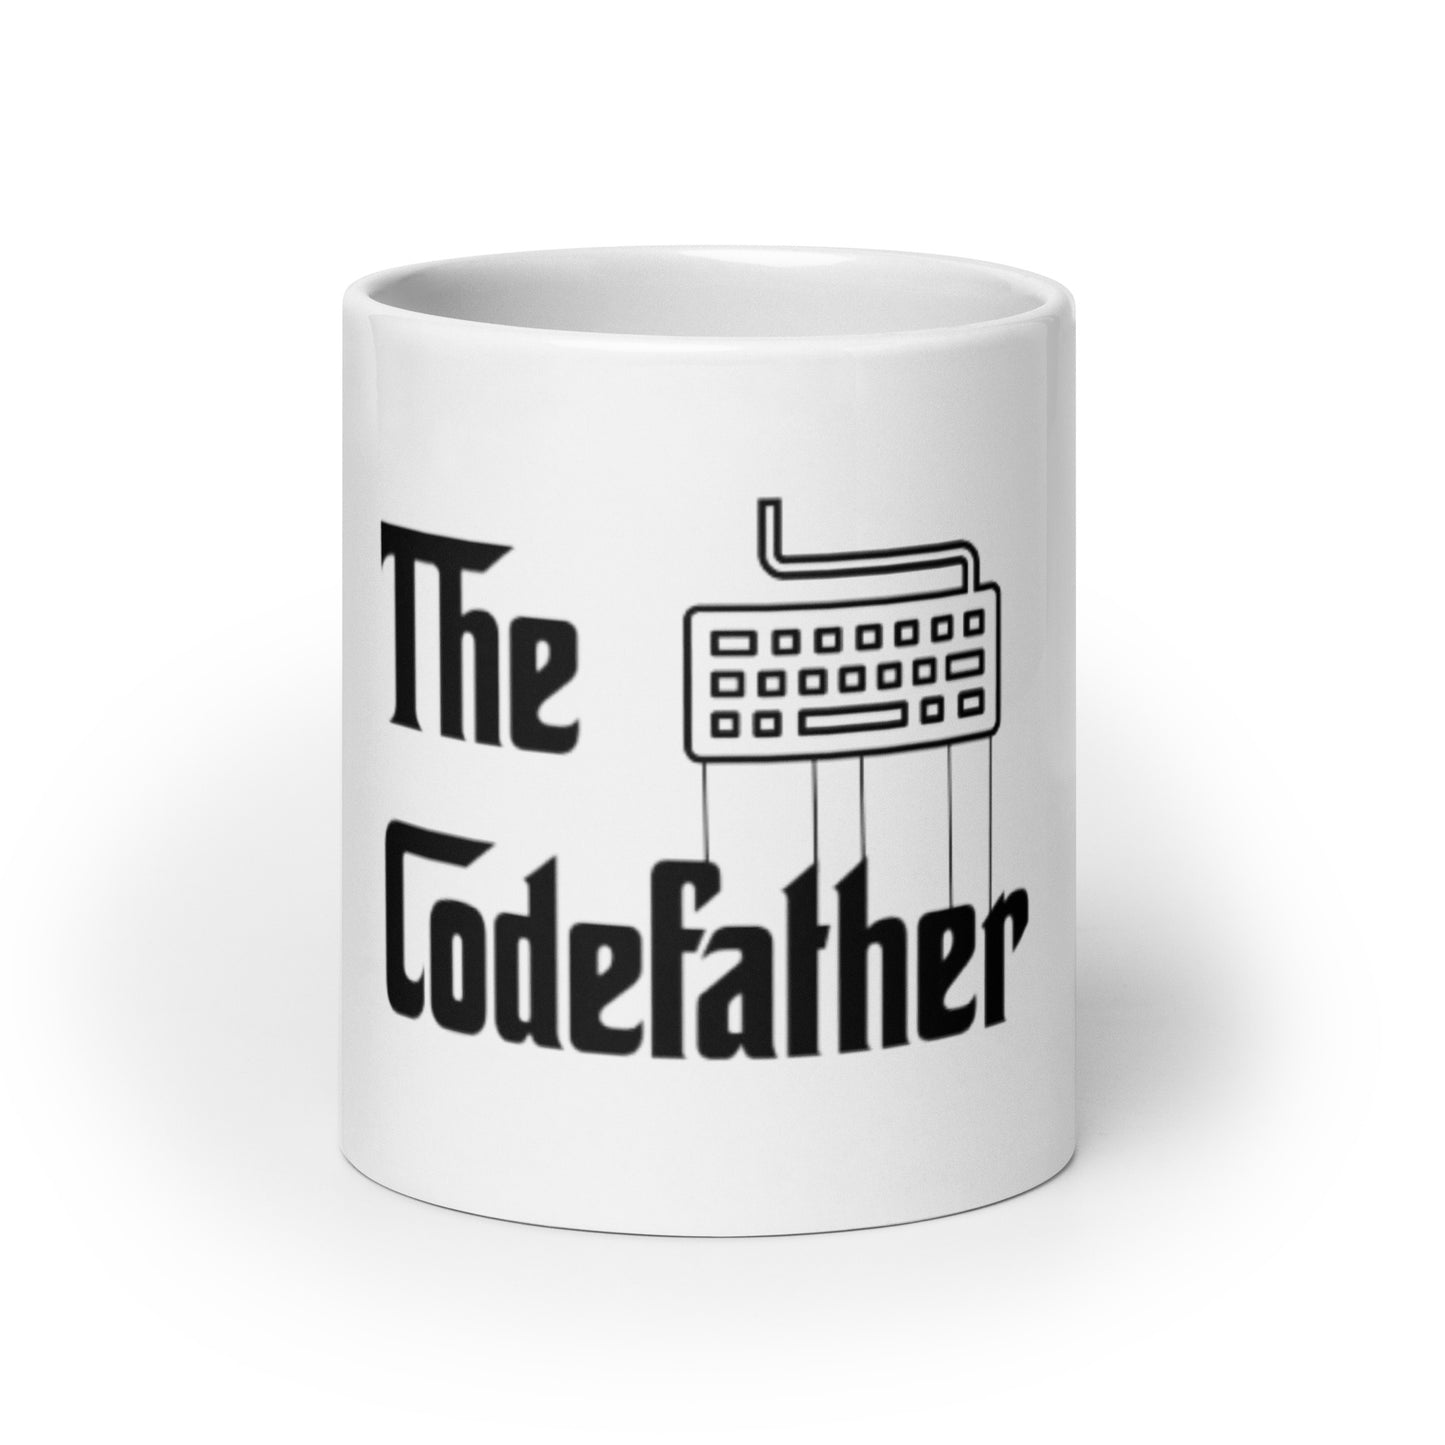 The Codefather glossy mug